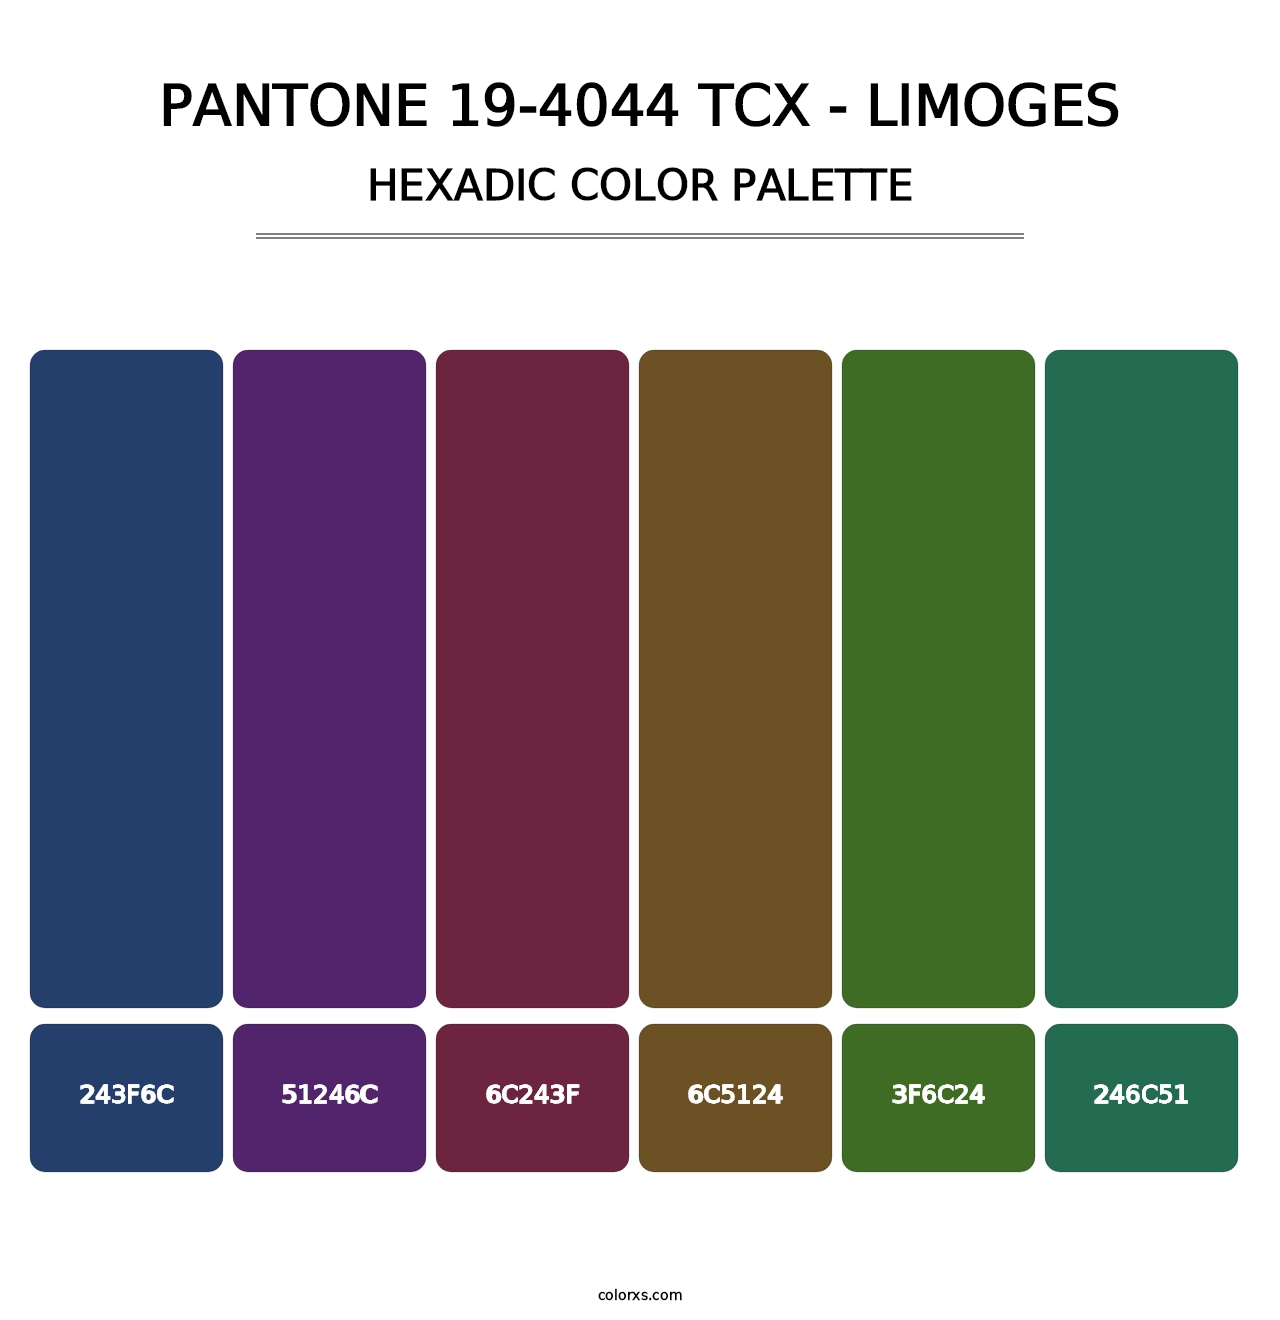 PANTONE 19-4044 TCX - Limoges - Hexadic Color Palette